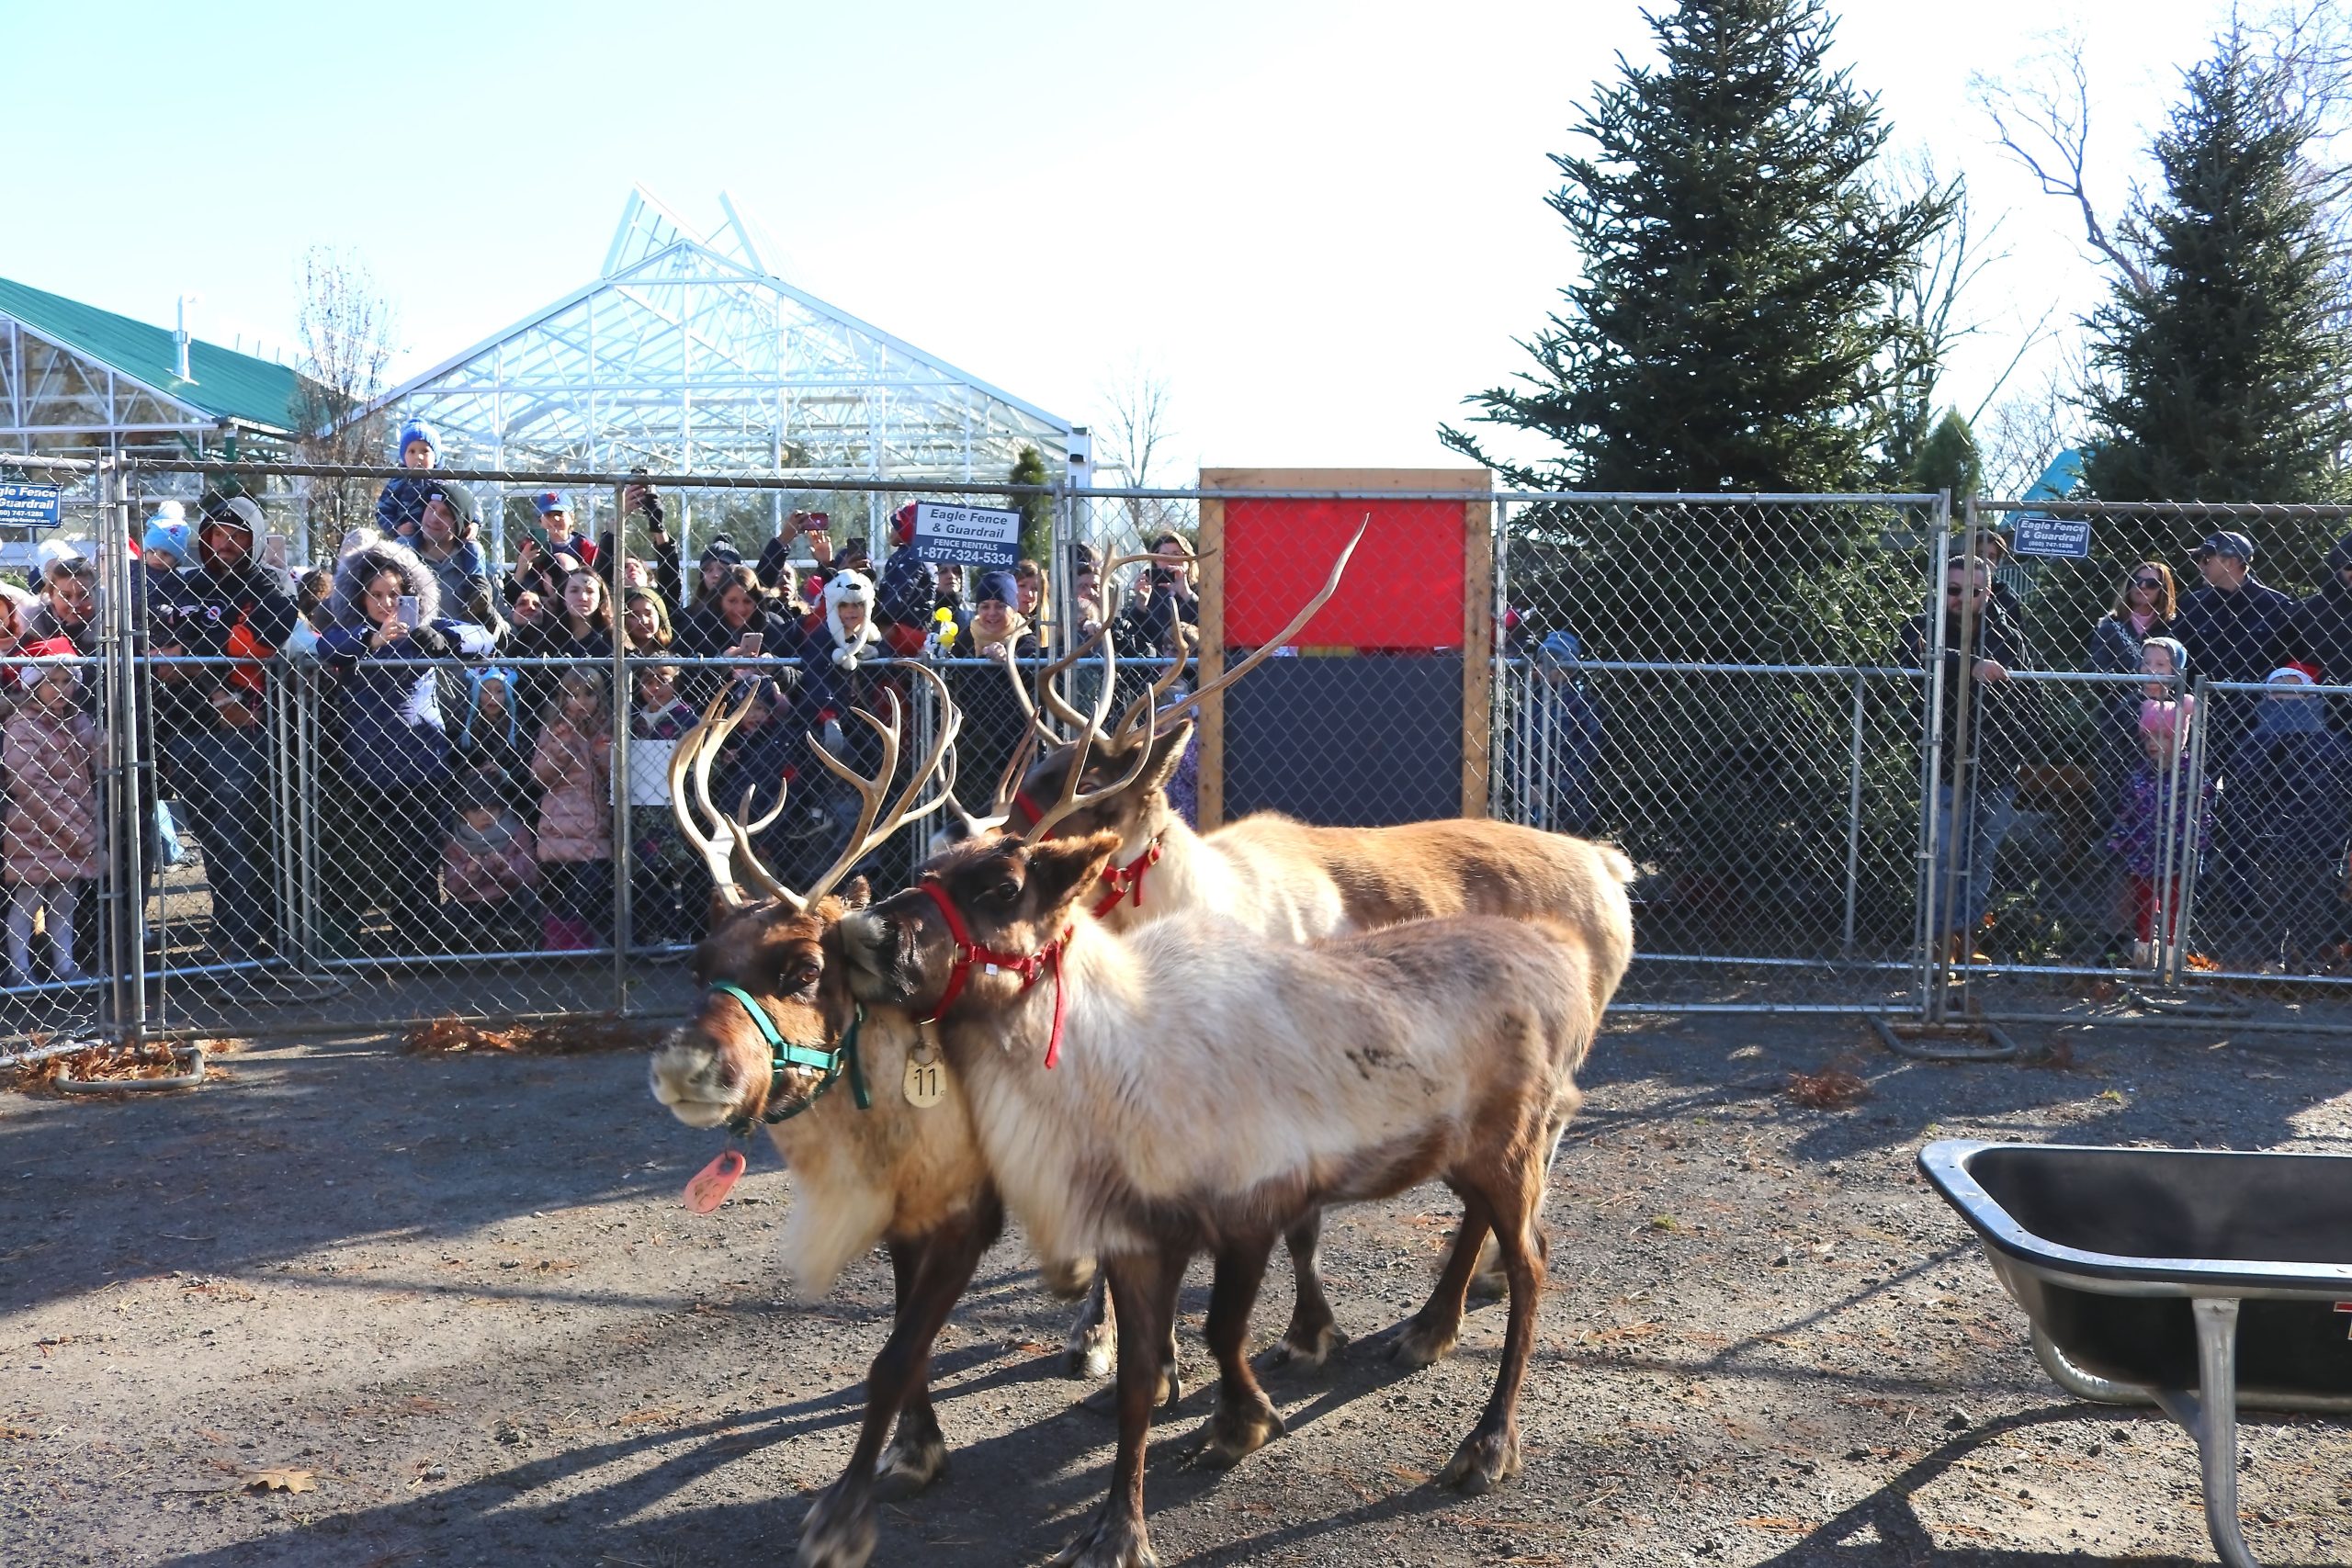 Reindeer Festival